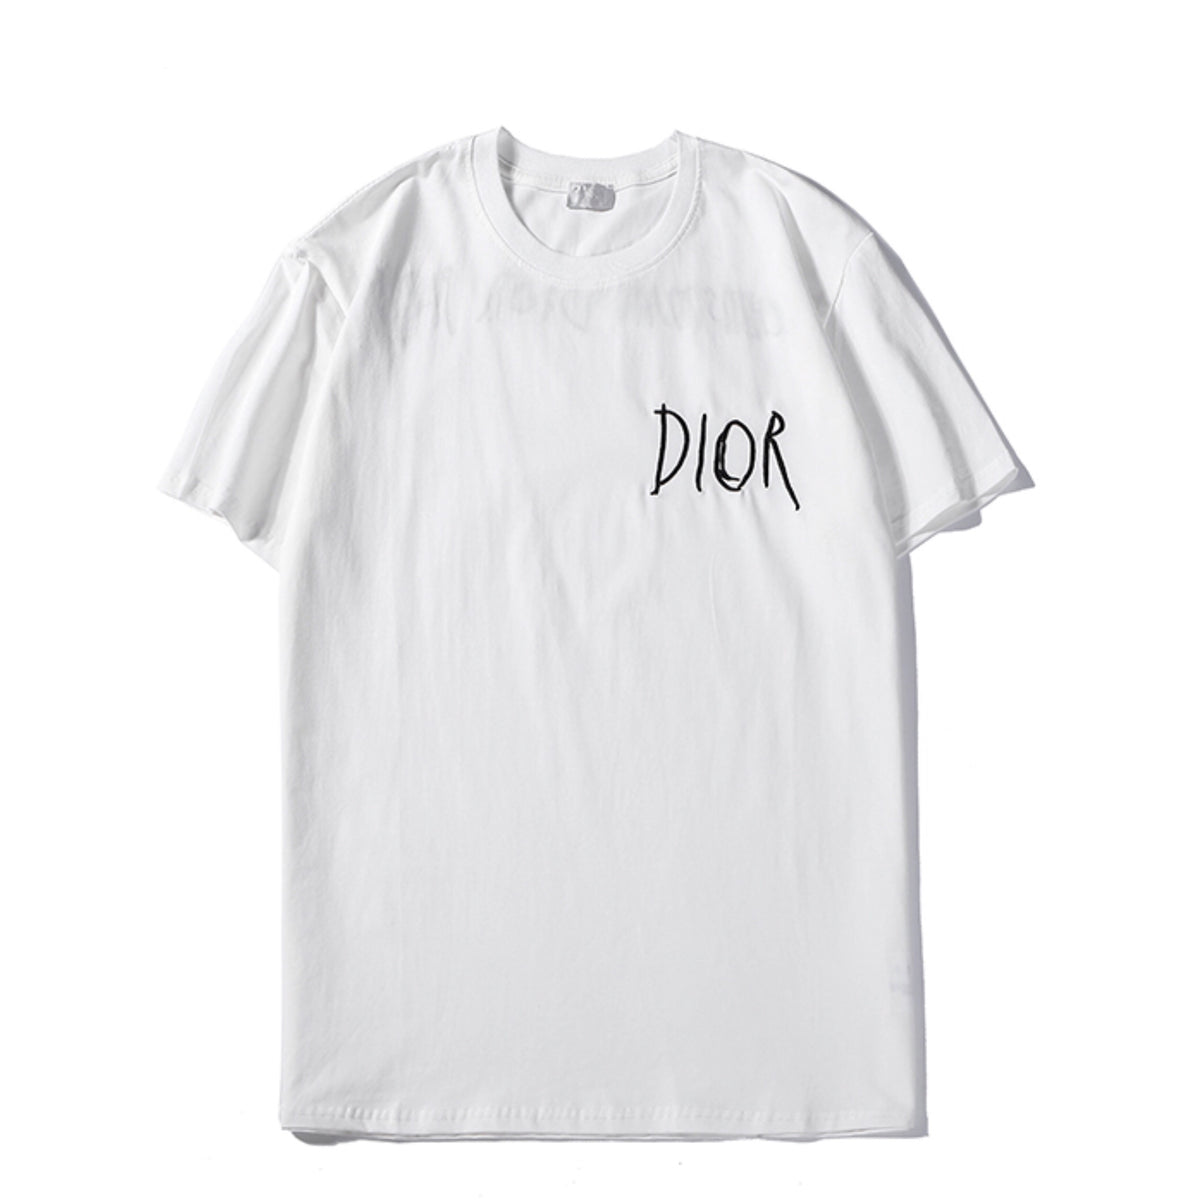 christian dior t shirt price